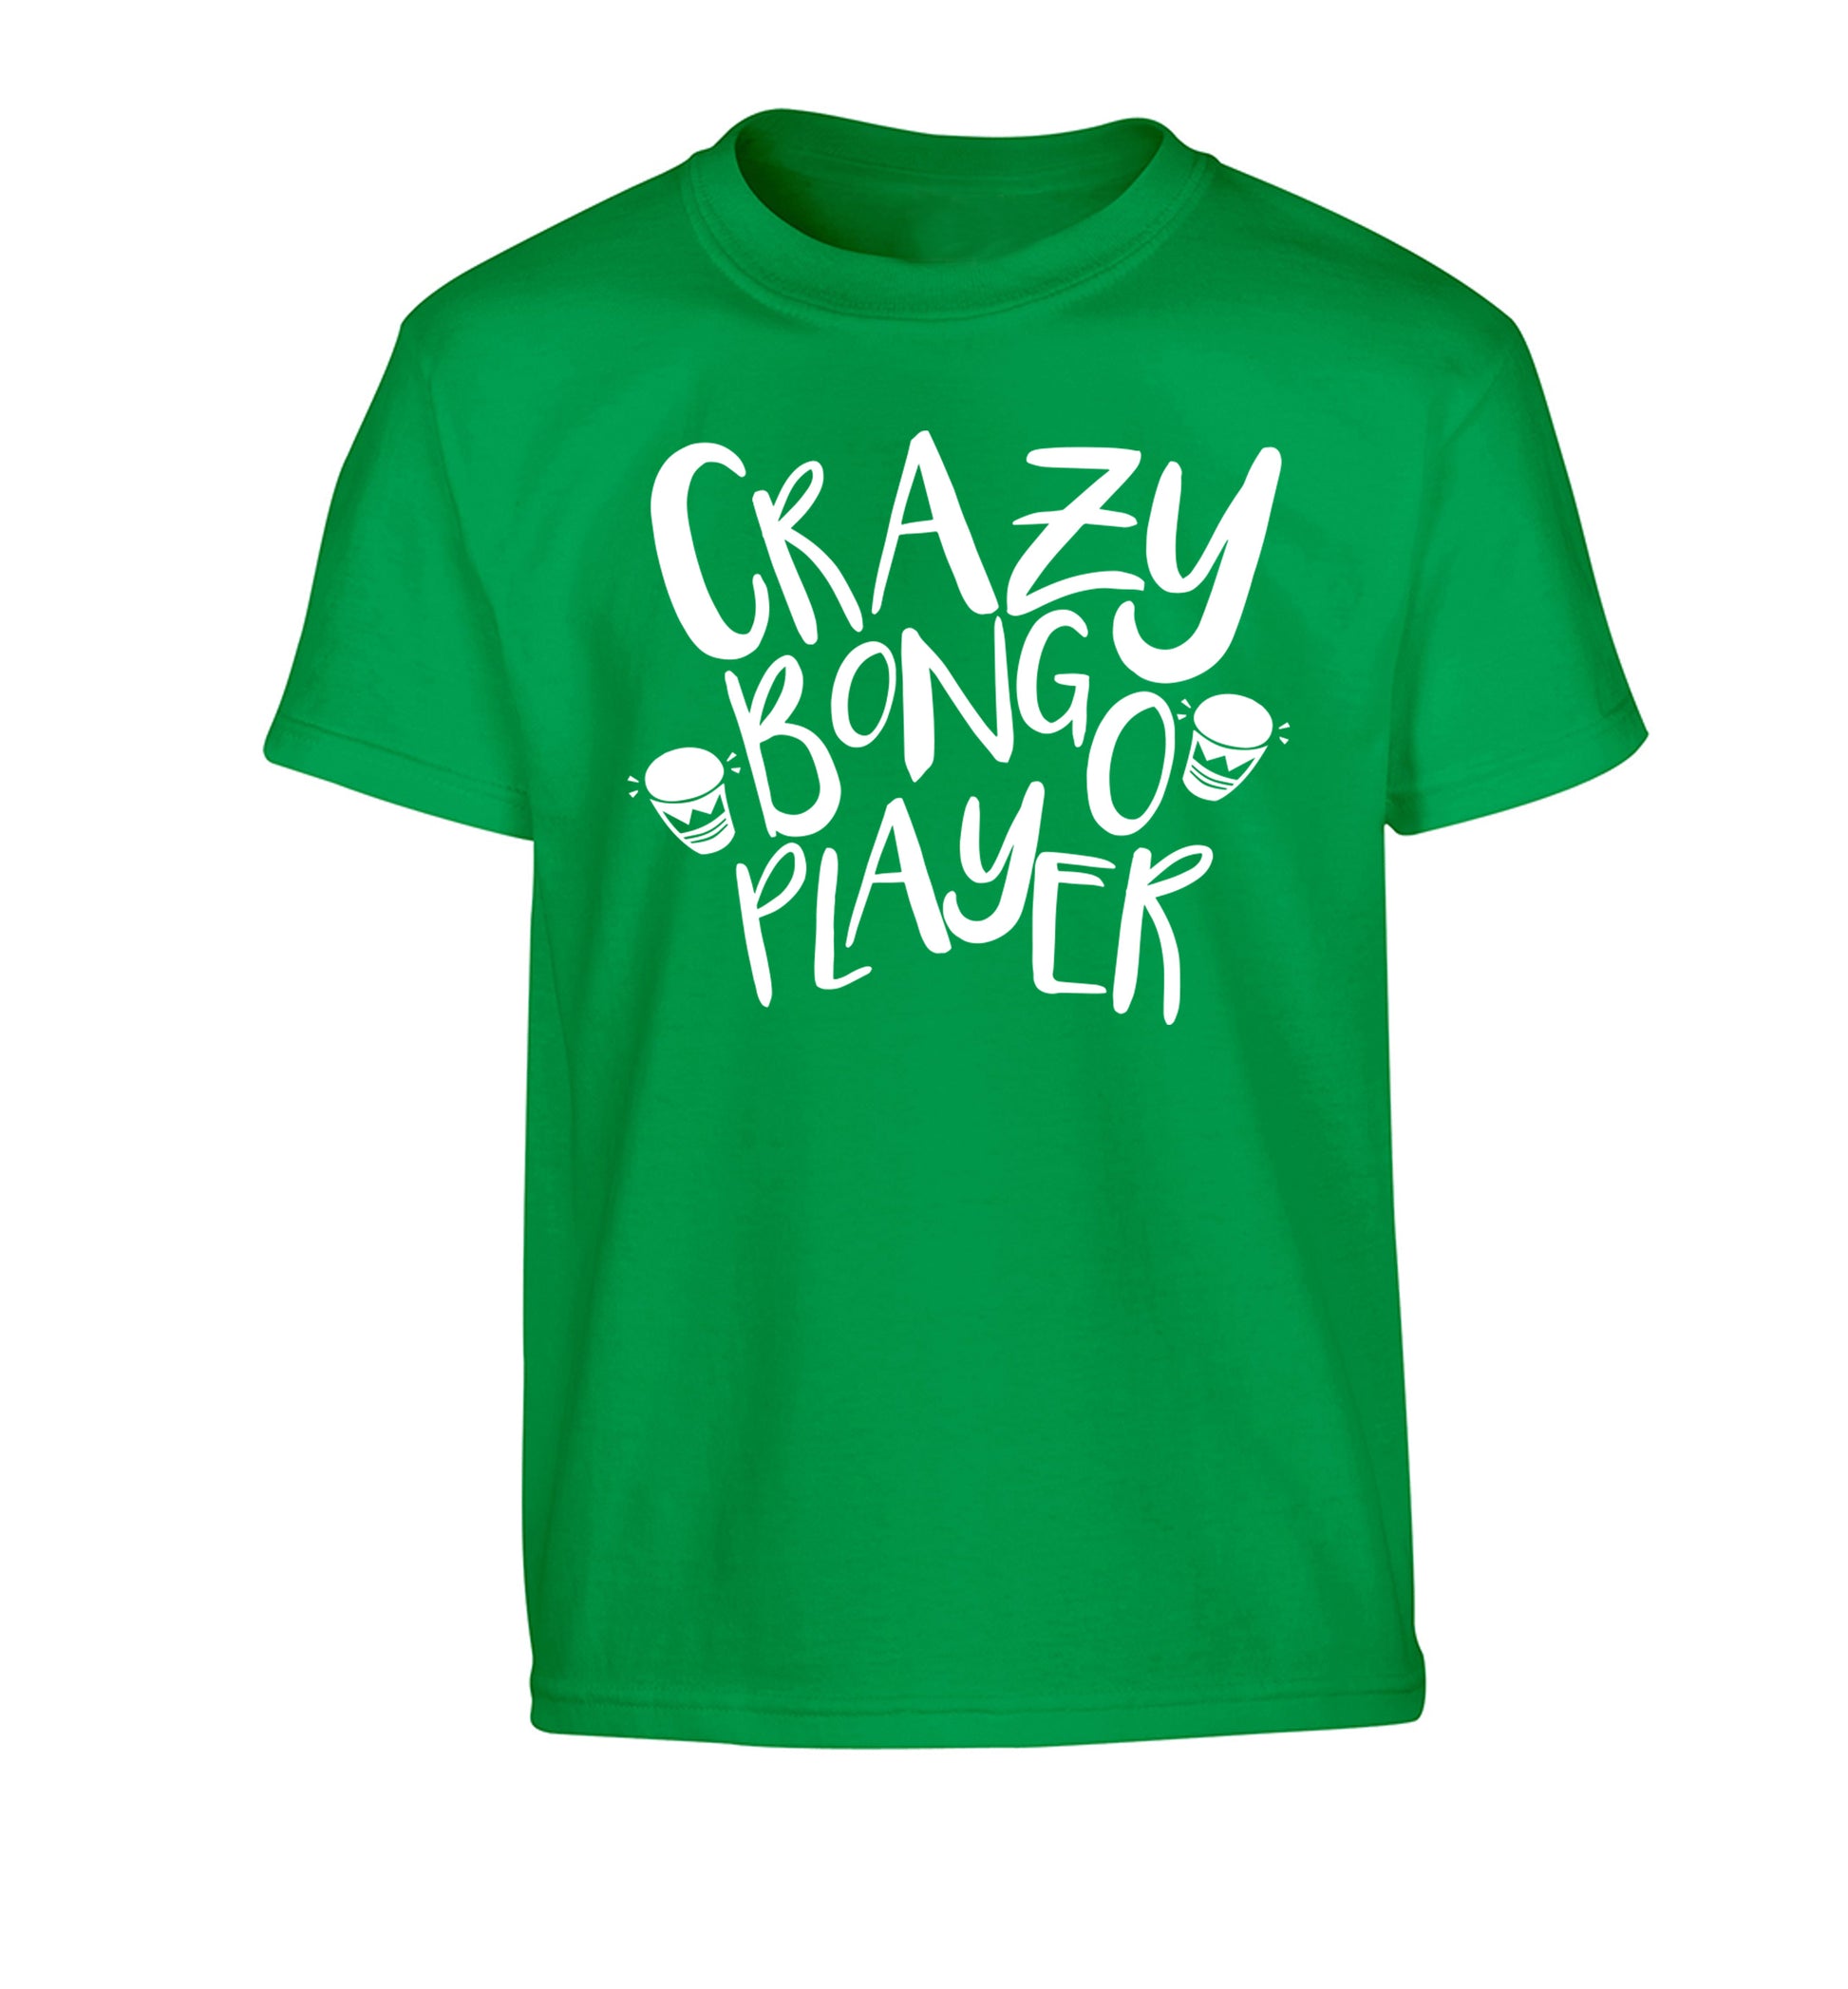 Crazy bongo player Children's green Tshirt 12-14 Years